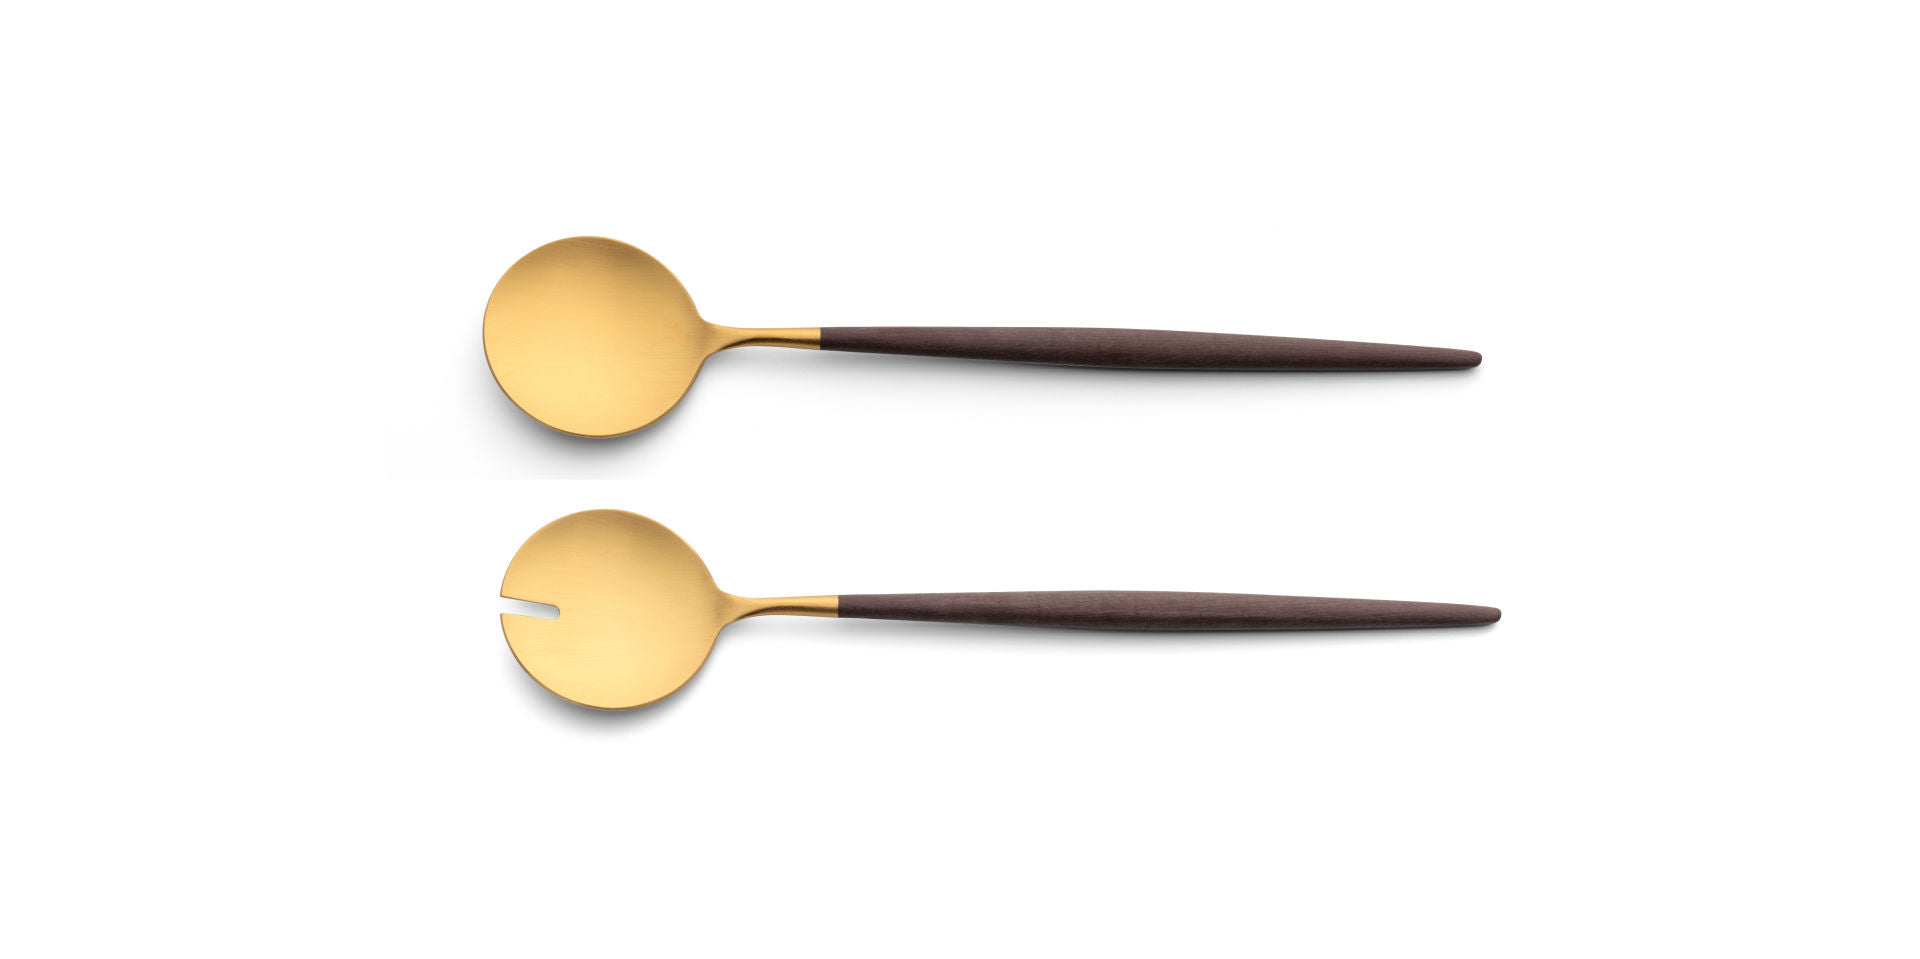 Goa Cutlery Set - Gold Brown